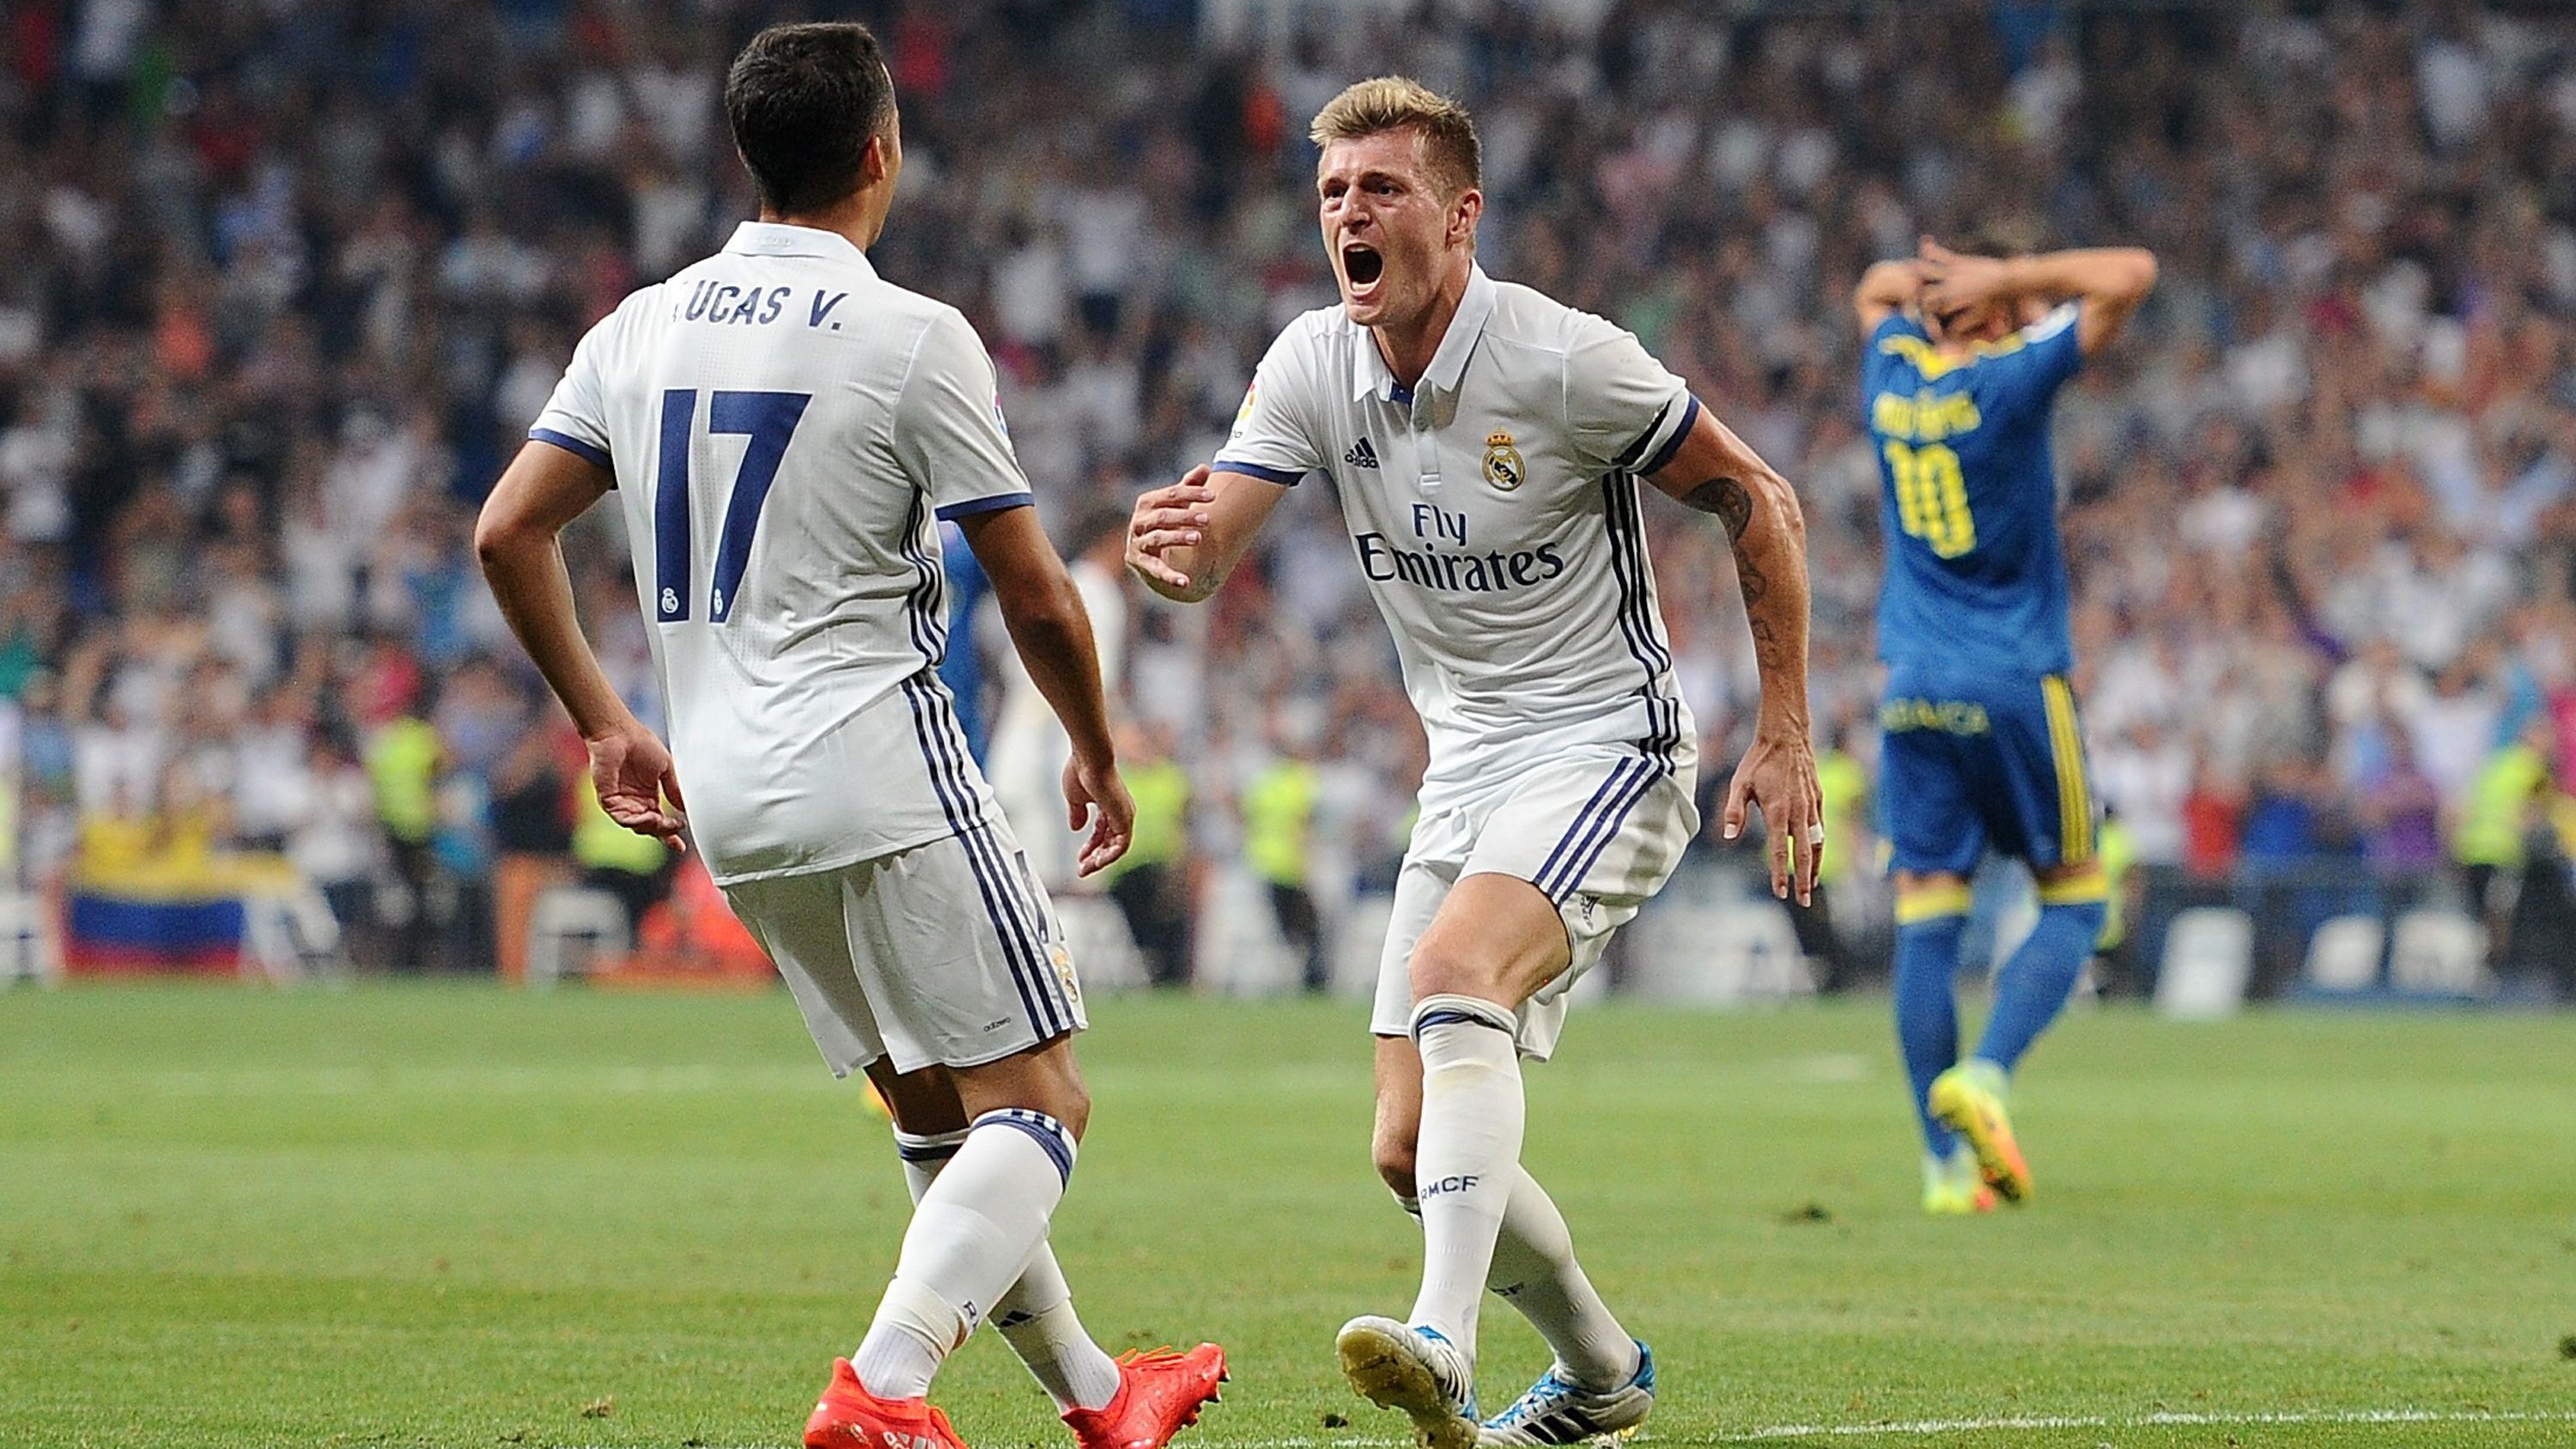 <strong>Platz 5: Lucas Vazquez</strong><br>- Verein(e): Real Madrid<br>- Spiele: 258